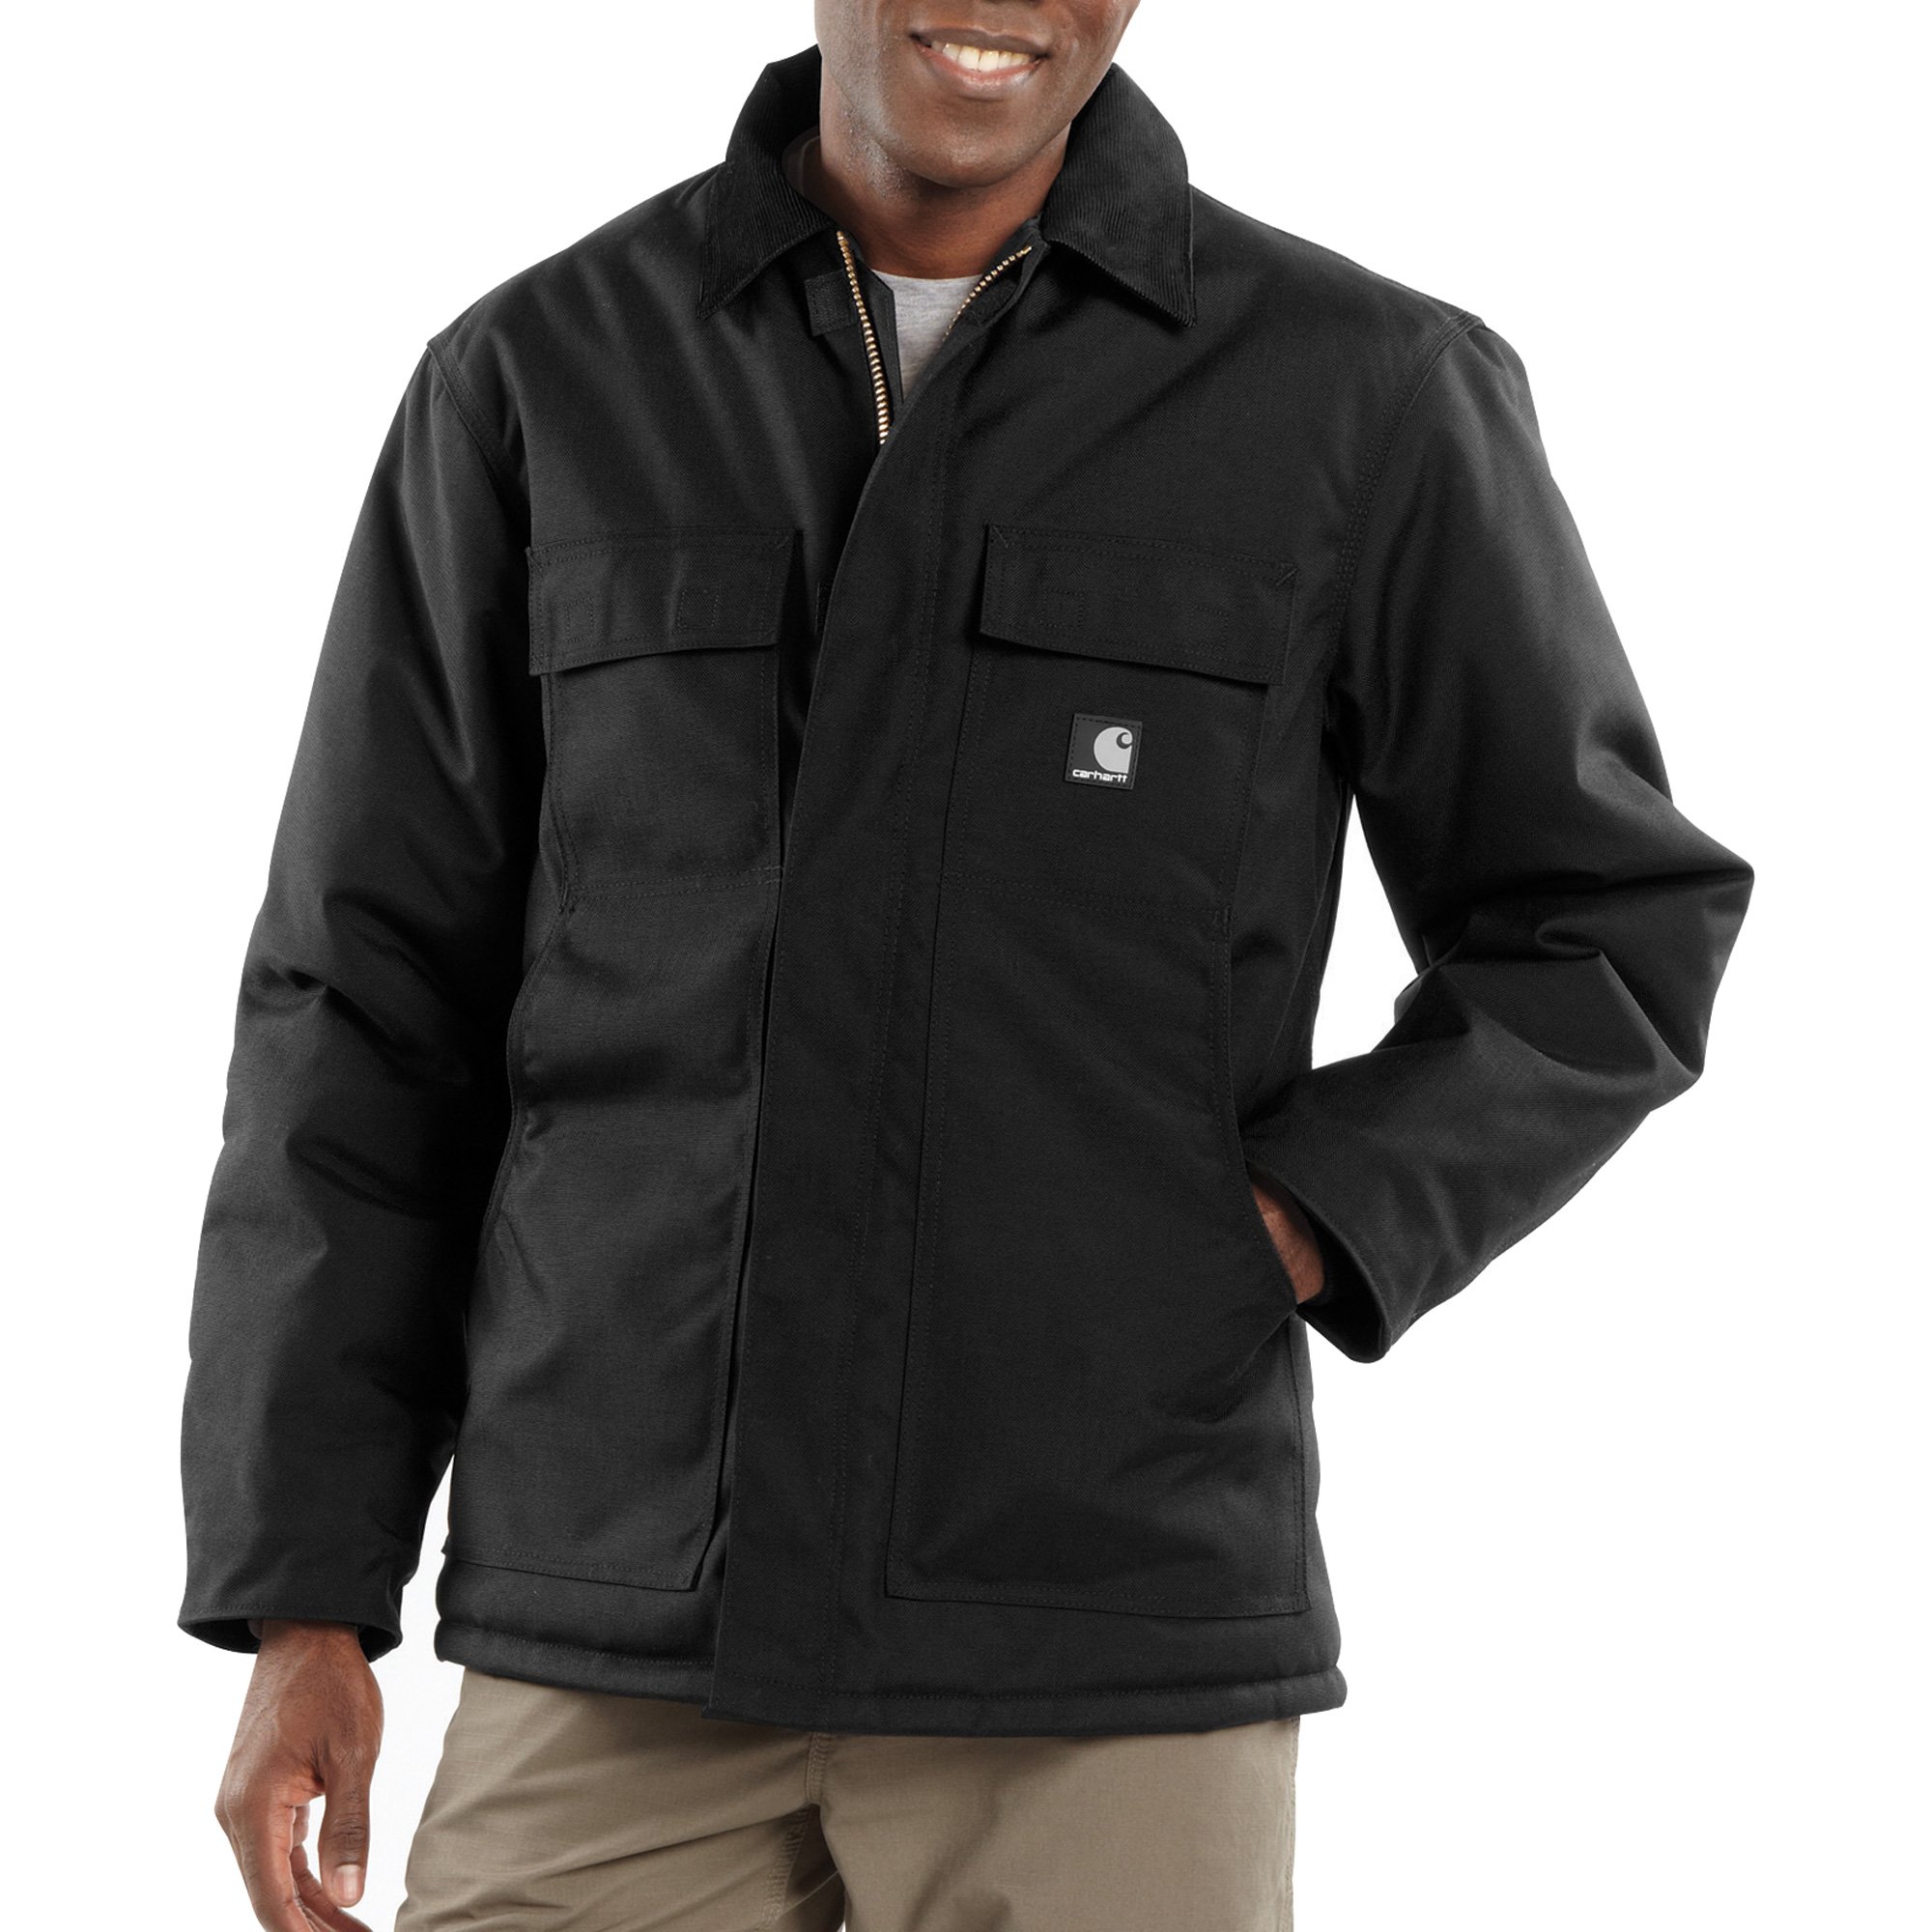 CARHARTT Coat: Jacket, Men's, Jacket Garment, 4XL, Black, Regular,  Insulated for Cold Conditions